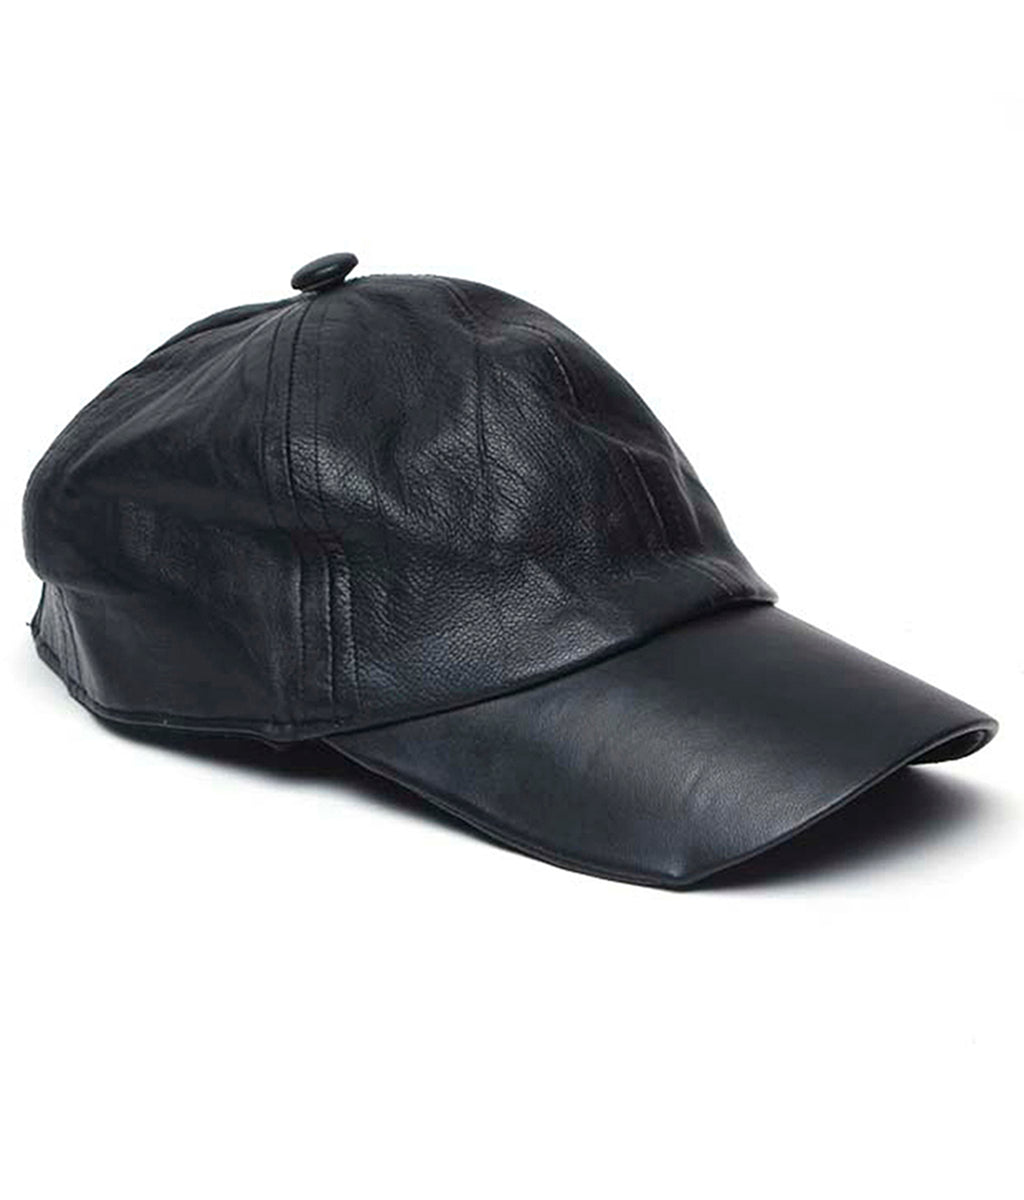 RL Leather Cap / Baseball Cap - [walletsnbags_name]